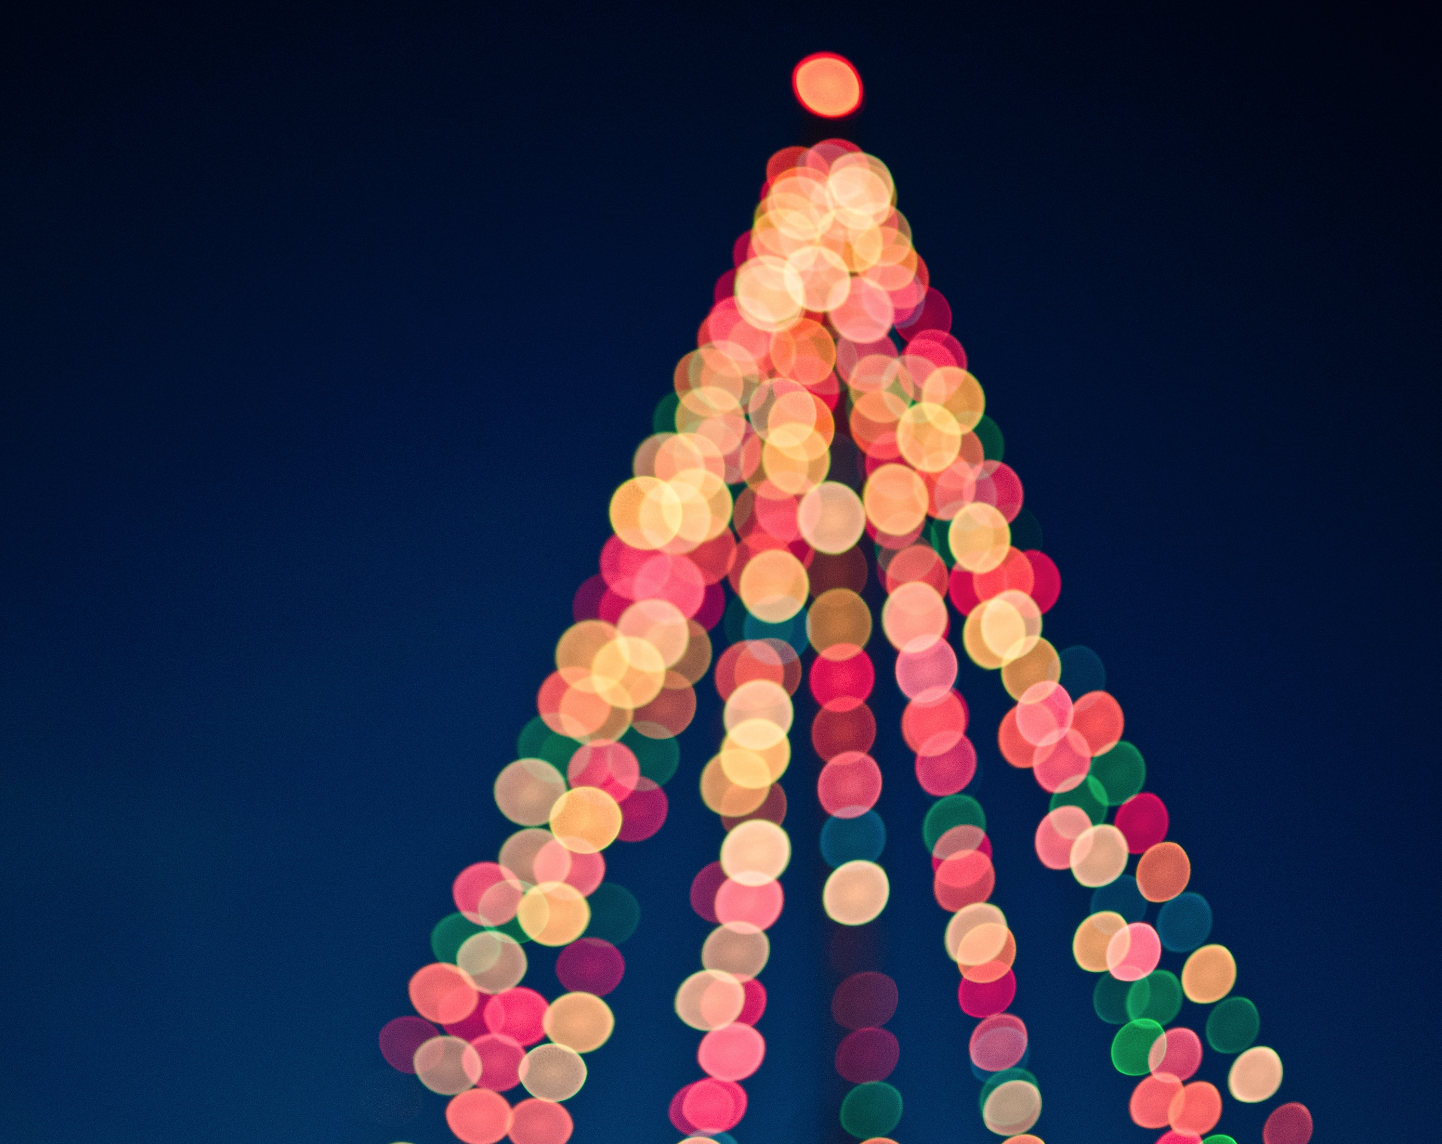 blurred lights on a christmas tree